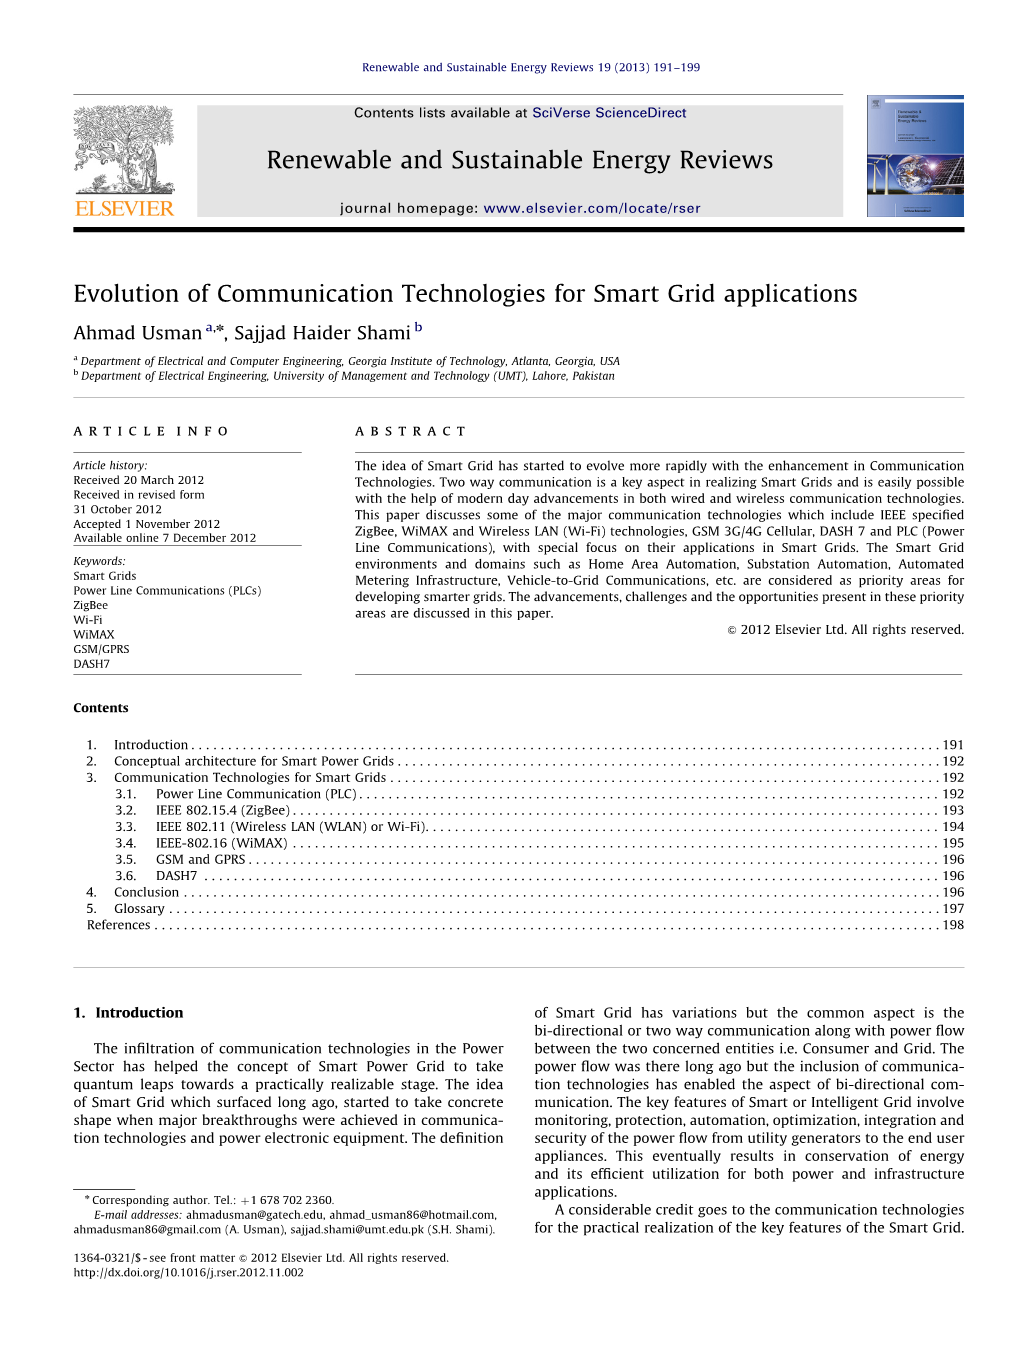 Evolution of Communication Technologies for Smart Grid Applications